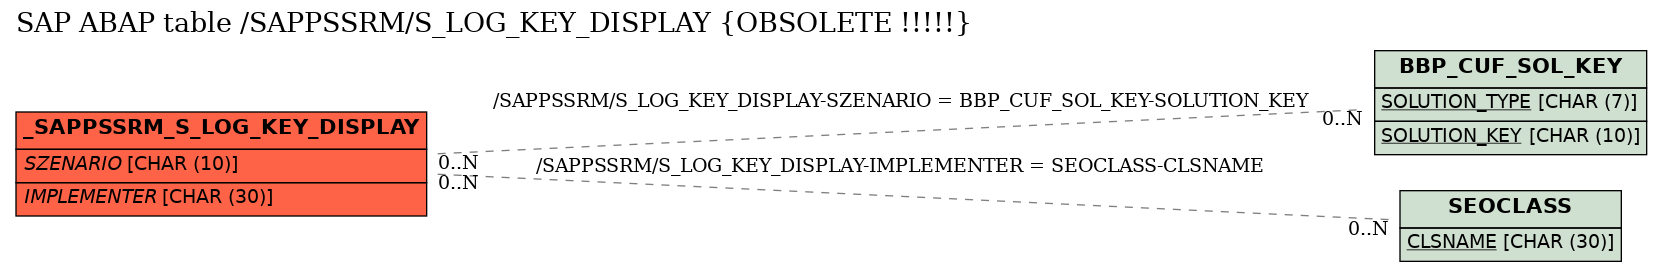 E-R Diagram for table /SAPPSSRM/S_LOG_KEY_DISPLAY (OBSOLETE !!!!!)